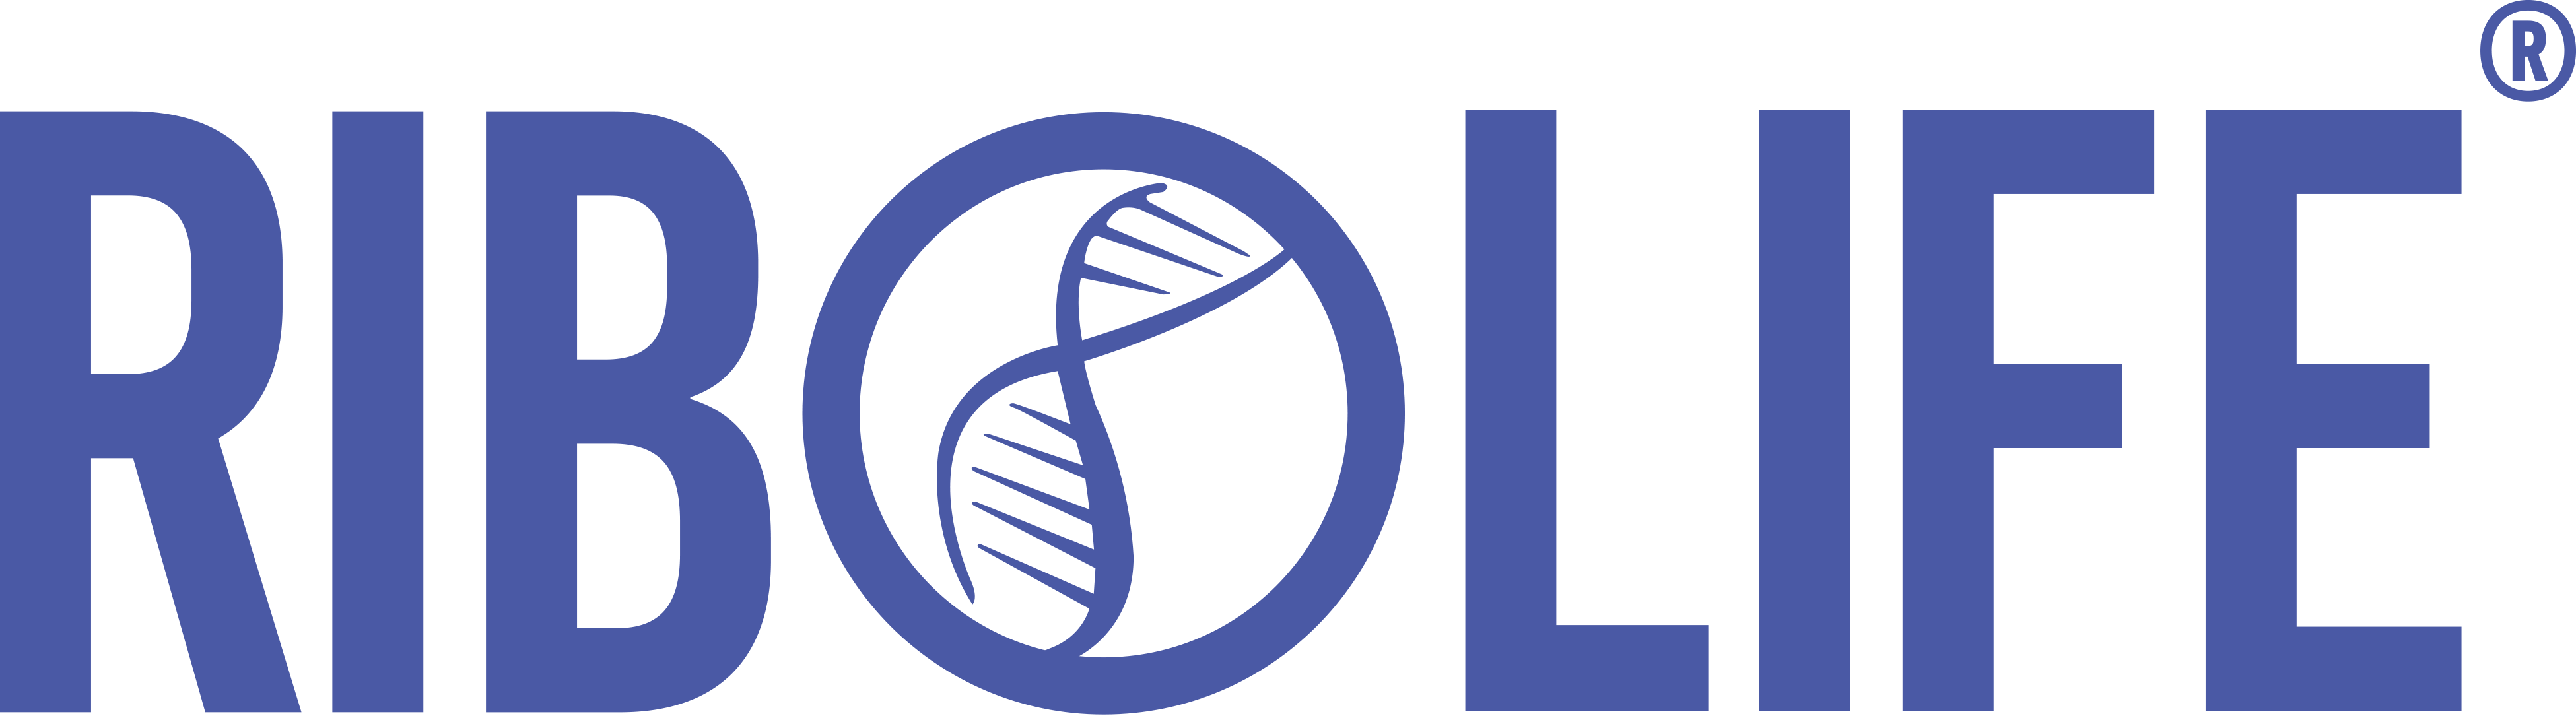 ribolife logo